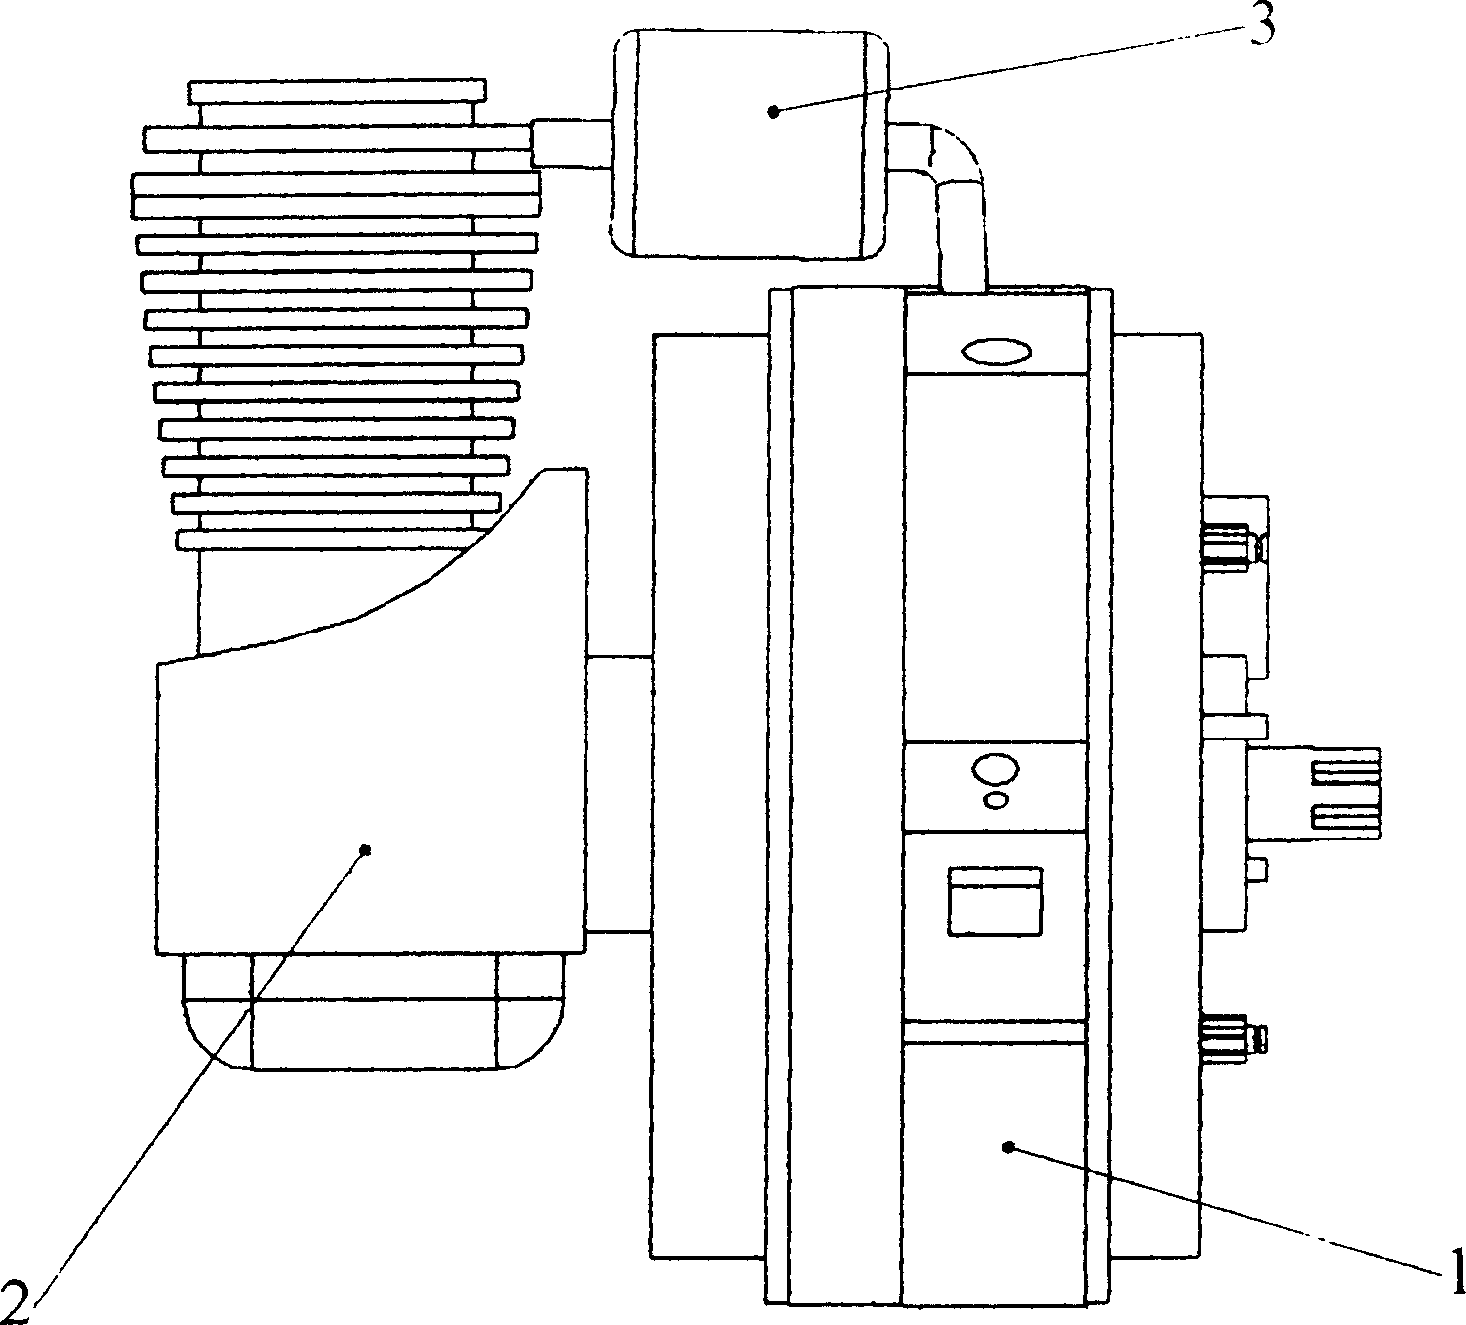 External-compression rotary piston engine